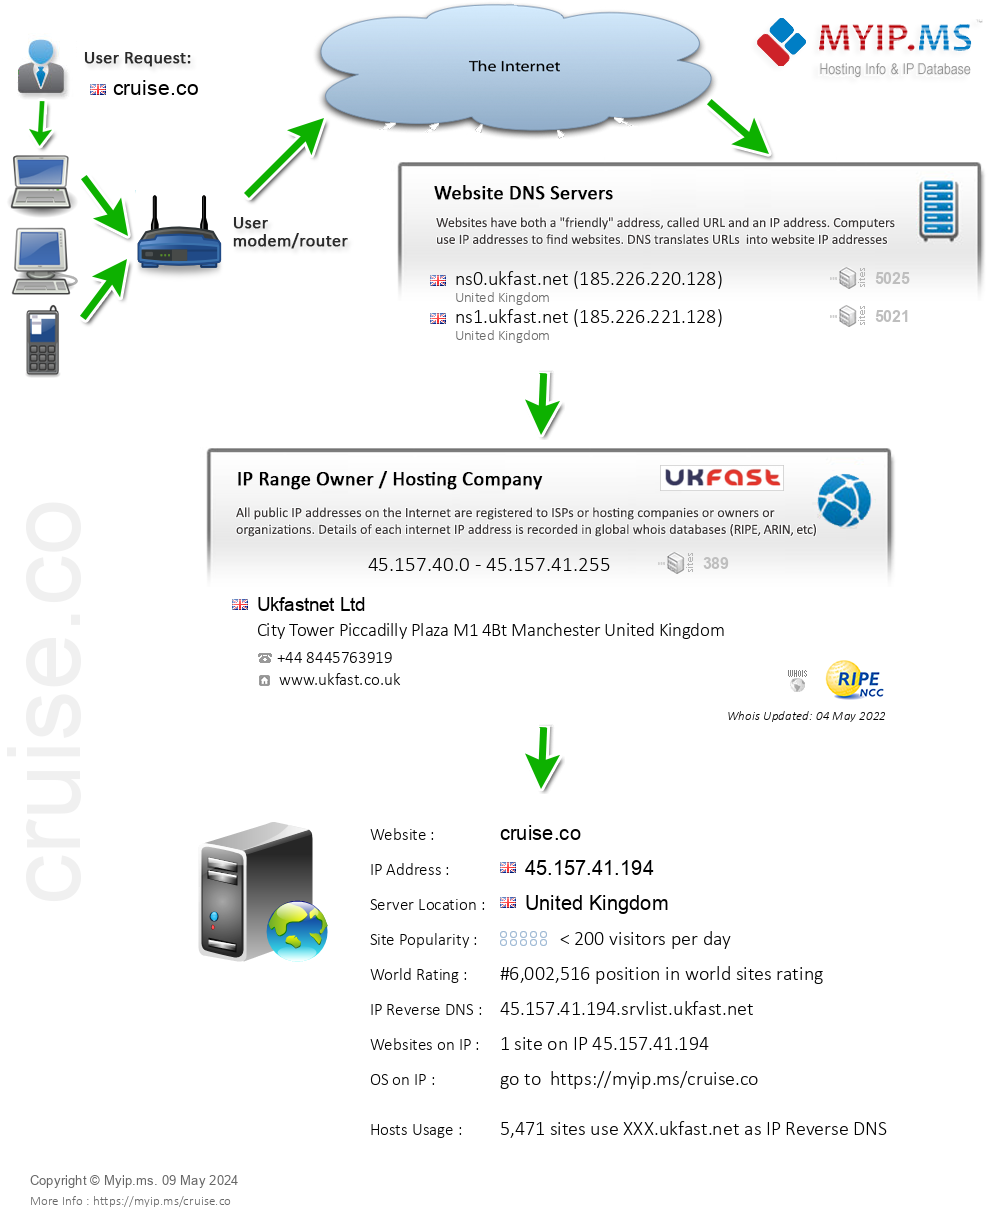 Cruise.co - Website Hosting Visual IP Diagram